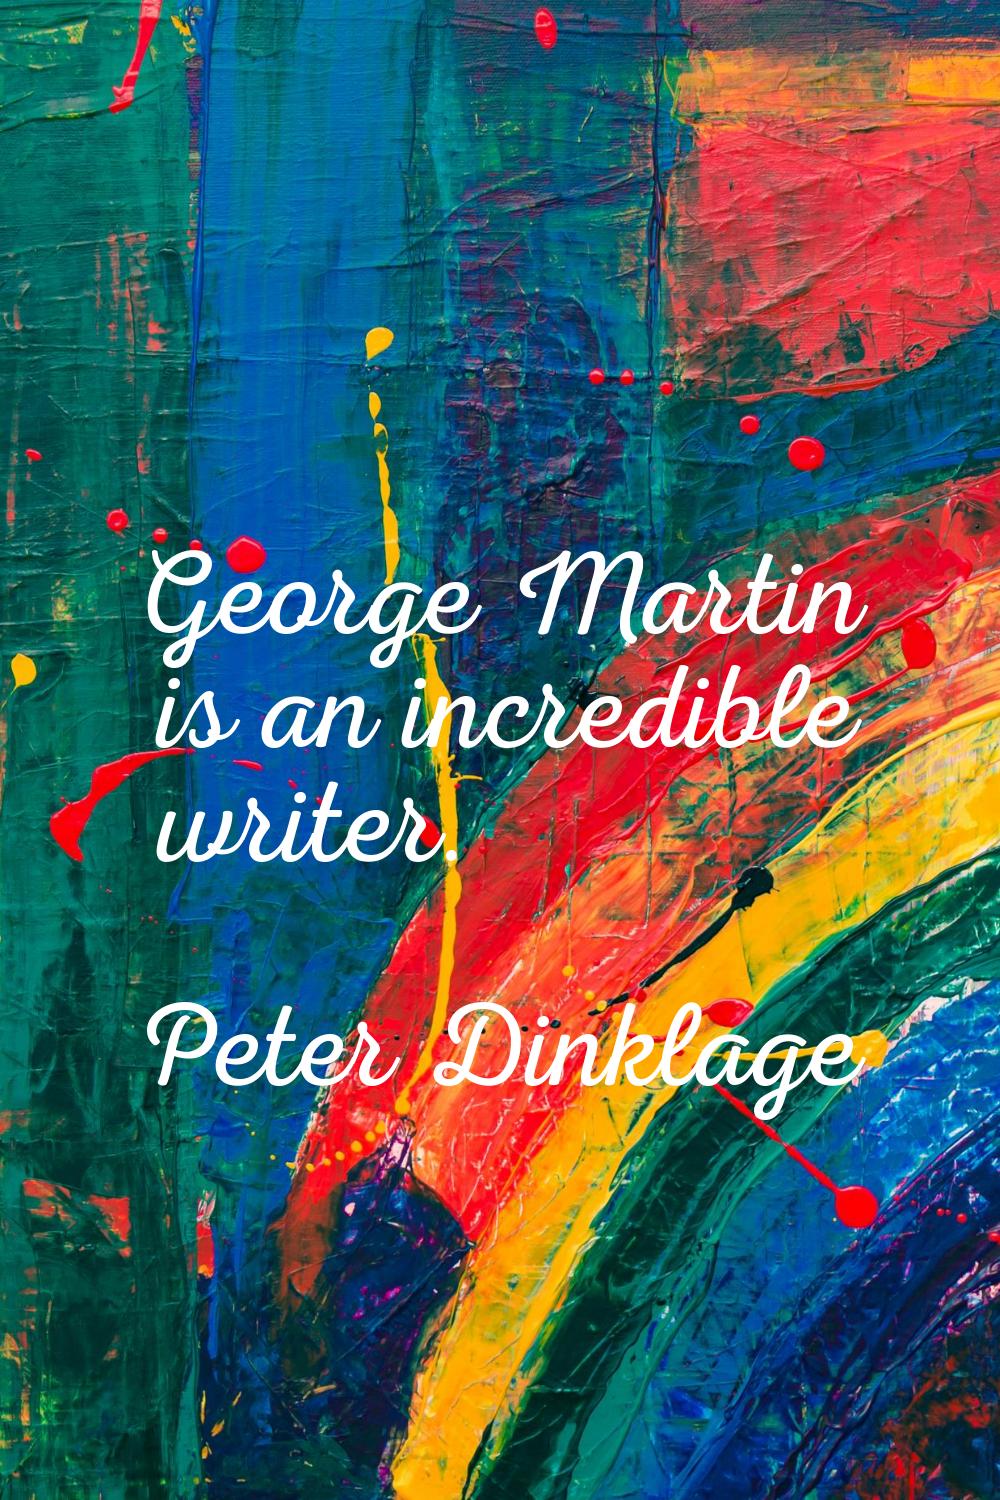 George Martin is an incredible writer.